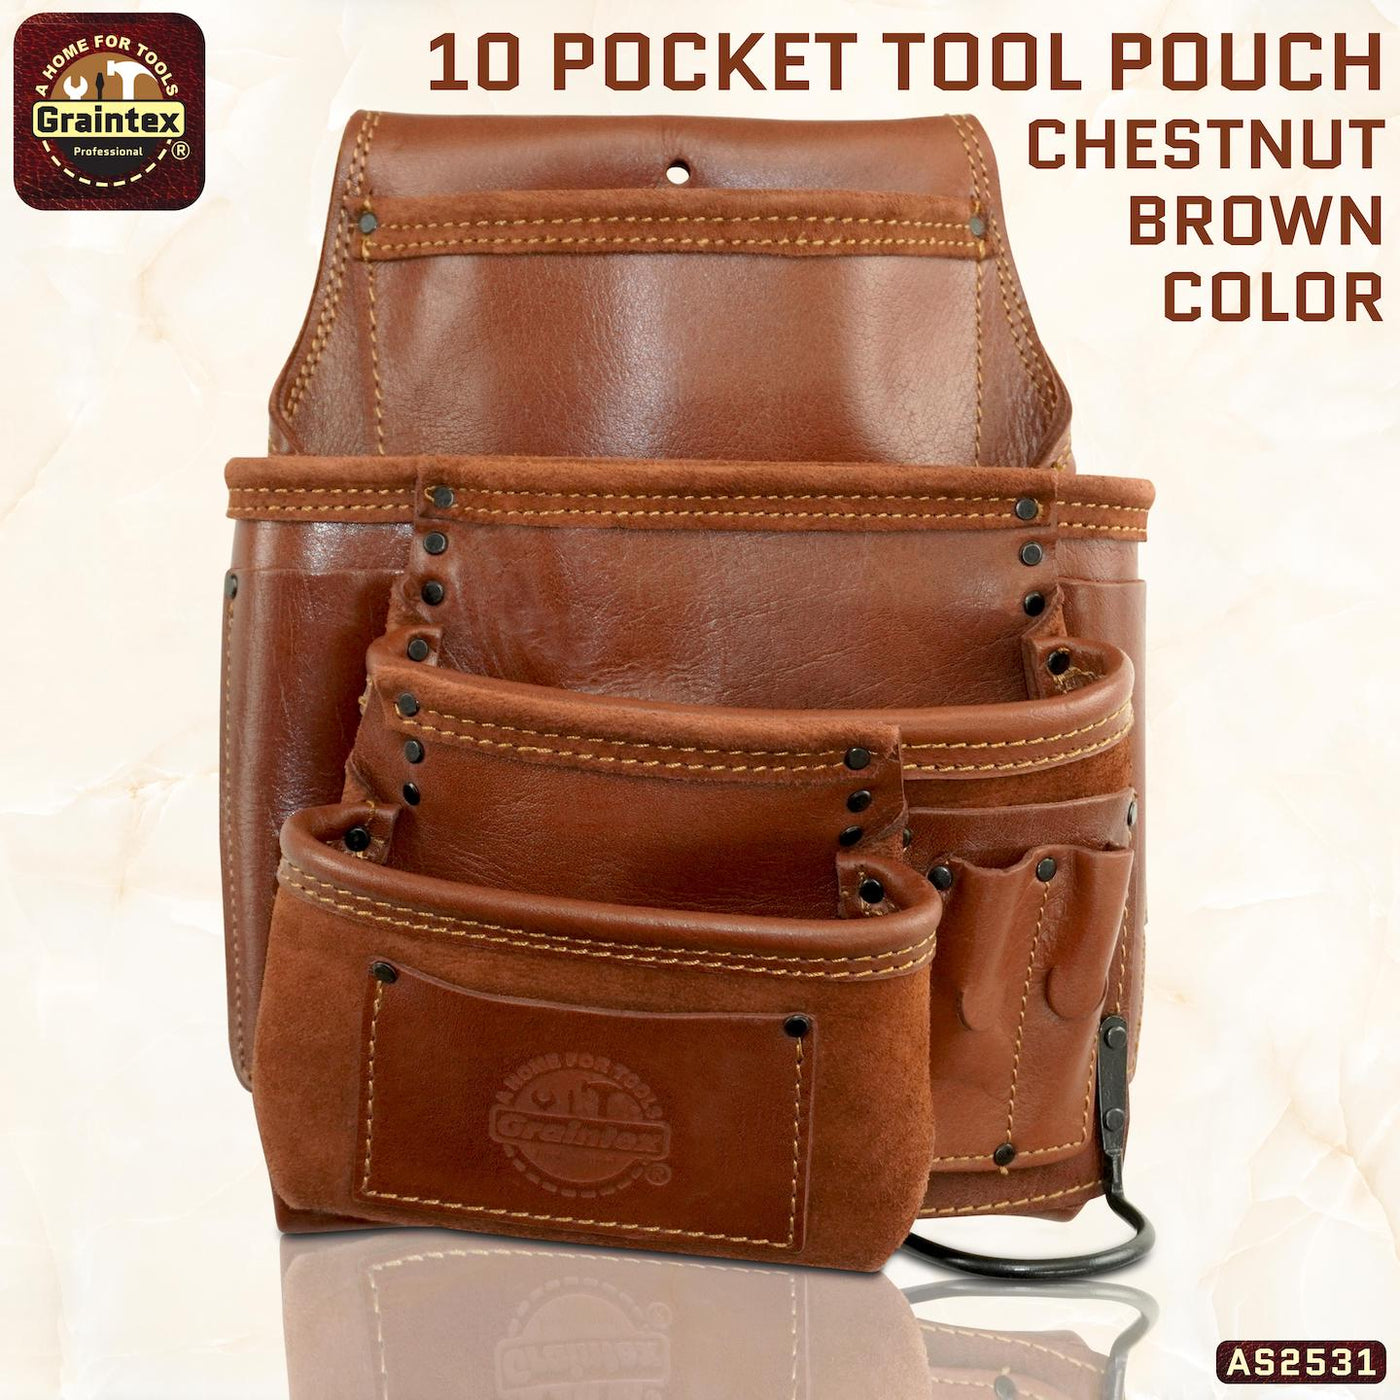 AS2531 :: 10 Pocket Left Handed Framer’s Tool Pouch Ambassador Series Chestnut Brown Color Top Grain Leather